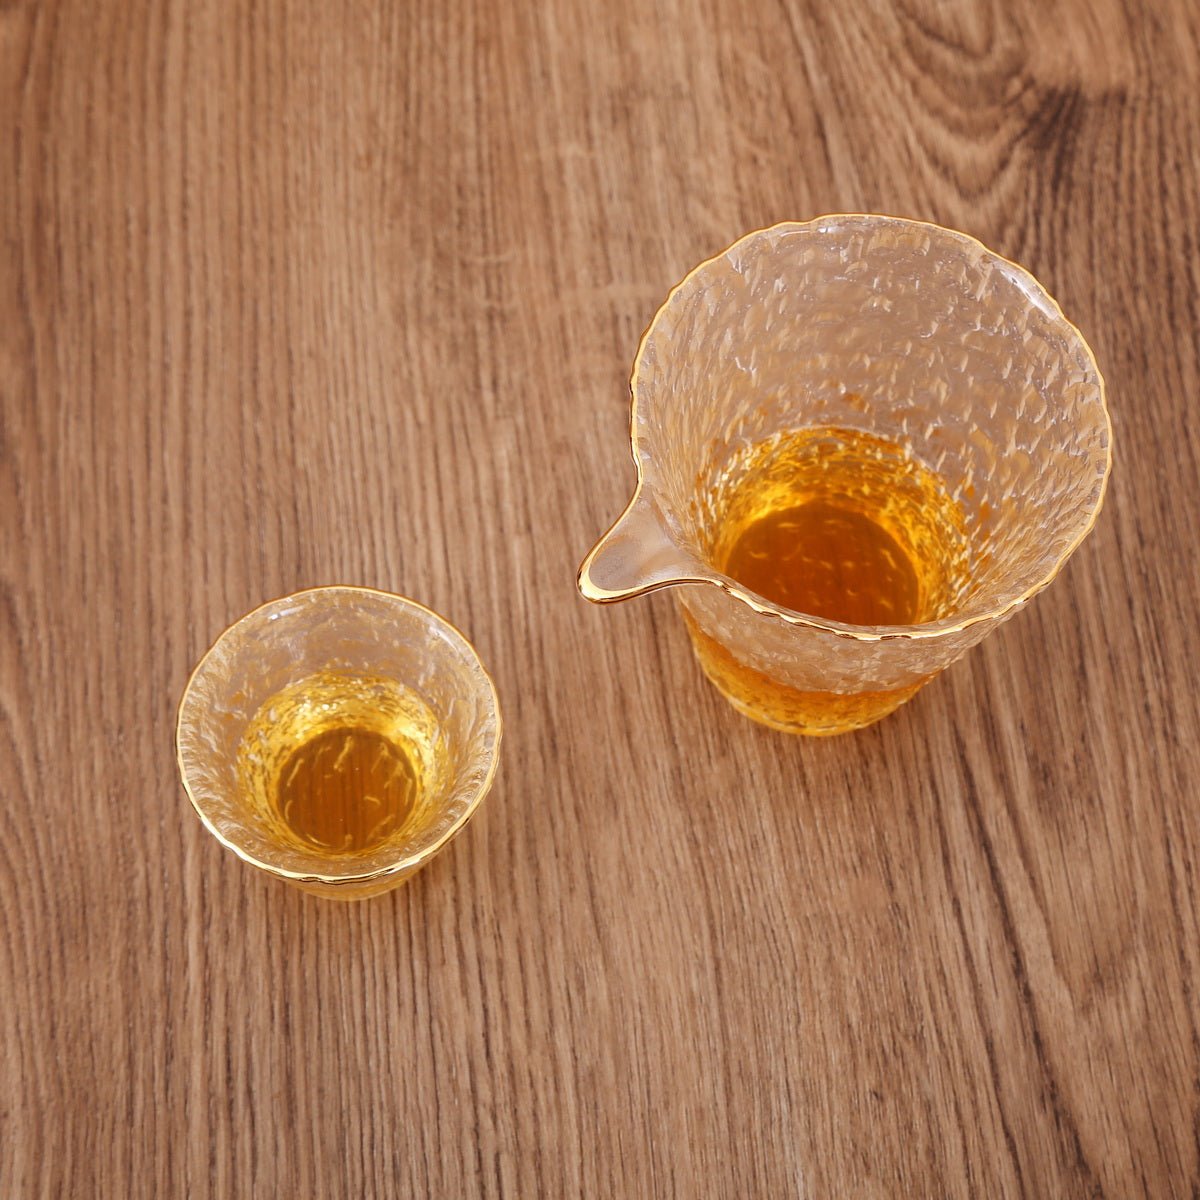 Hand-made Unique Frozen Texture Glassware Gift Tea Set - Taishan Tea Club